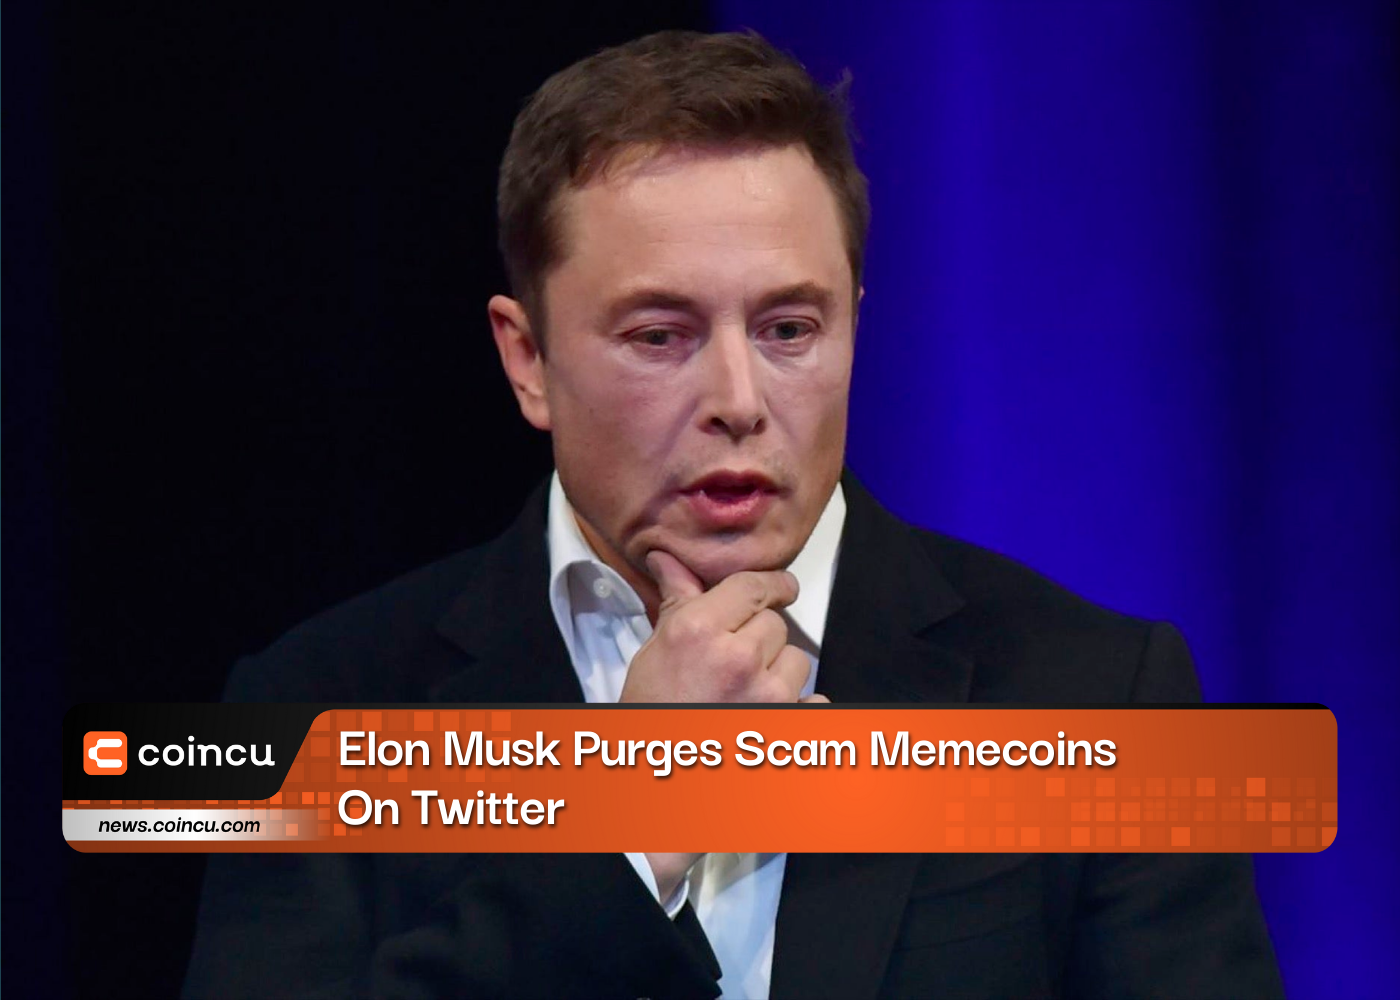 Elon Musk Purges Scam Memecoins On Twitter